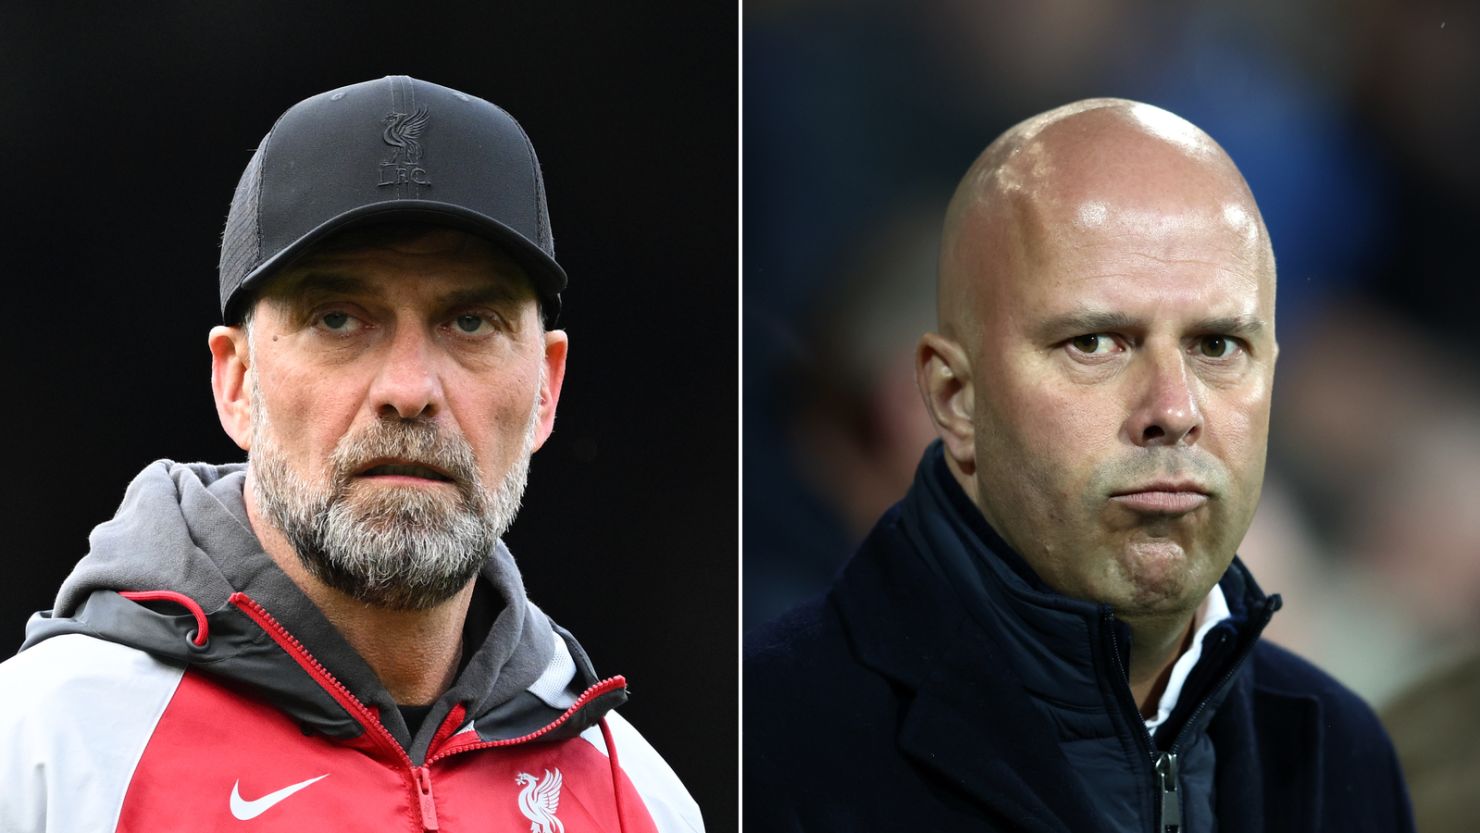 Feyenoord coach Arne Slot (right) is set to succeed Jurgen Klopp at Liverpool.